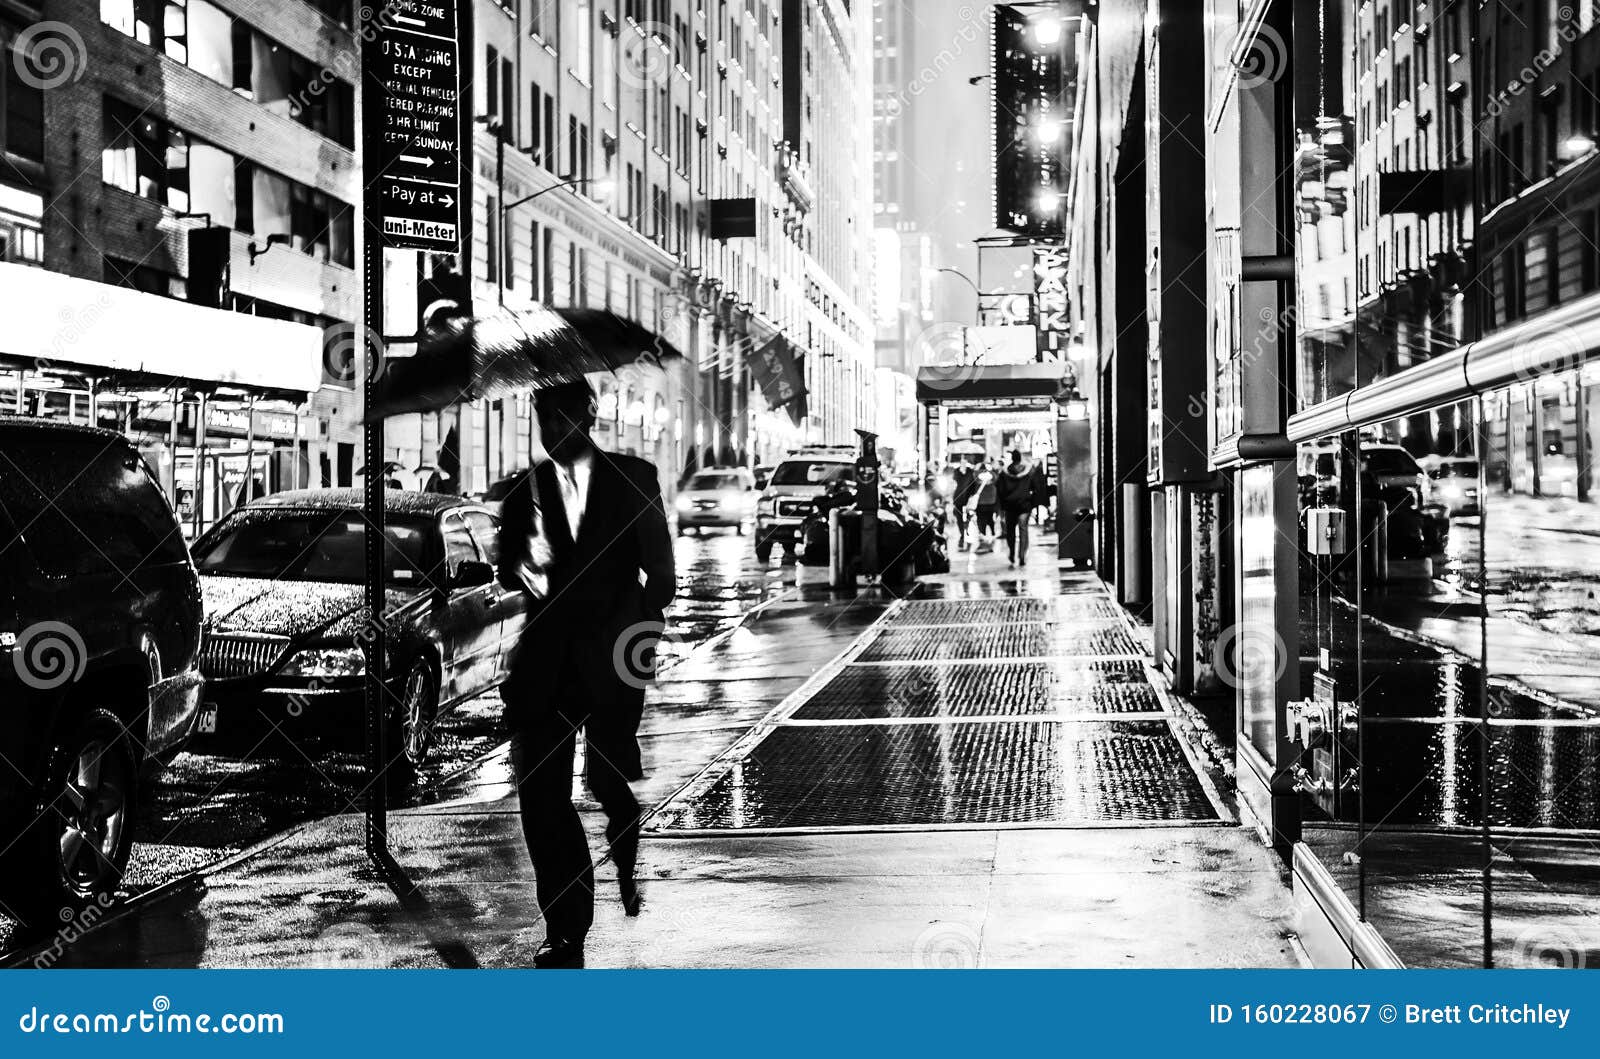 stylish black and white wet new york nyc commuter with umbrella